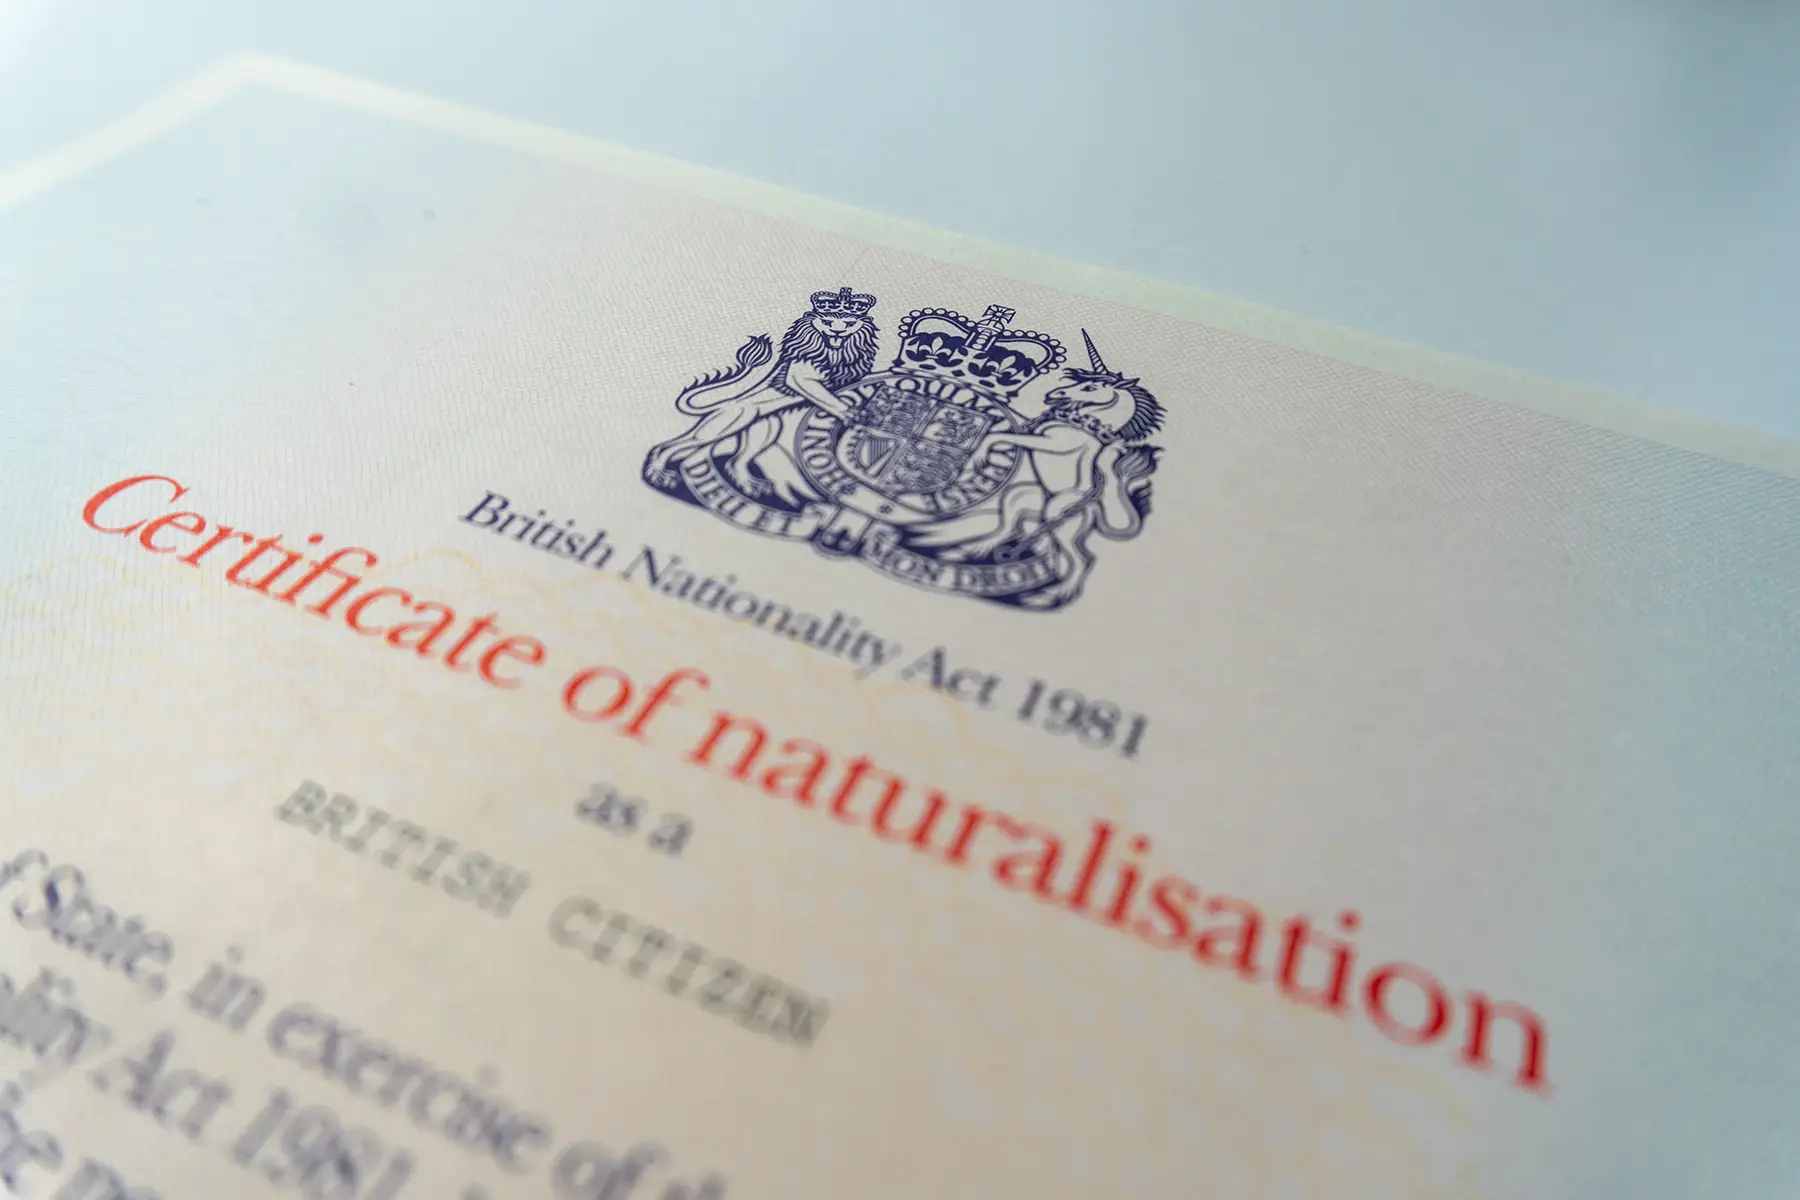 British citizenship certificate